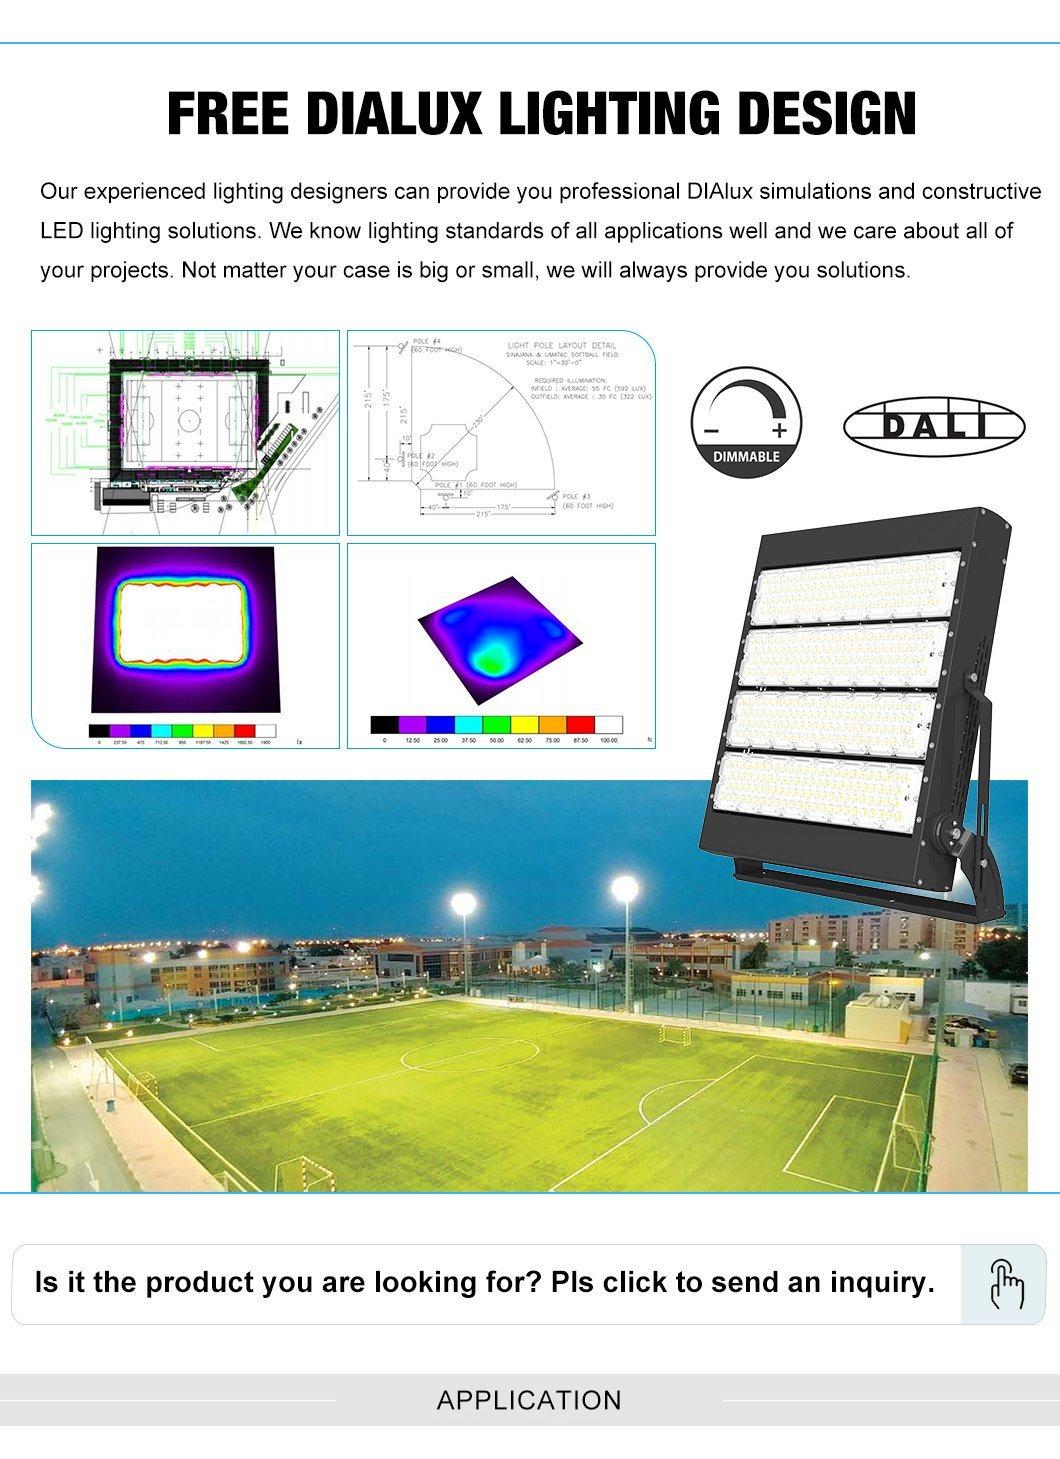 IP65 Waterproof New Design Stadium Lighting 500W 600W 800W Floodlight Multiple Optical Lenses LED Stadium Lamp 5 Years Warranty Stadium Lamp